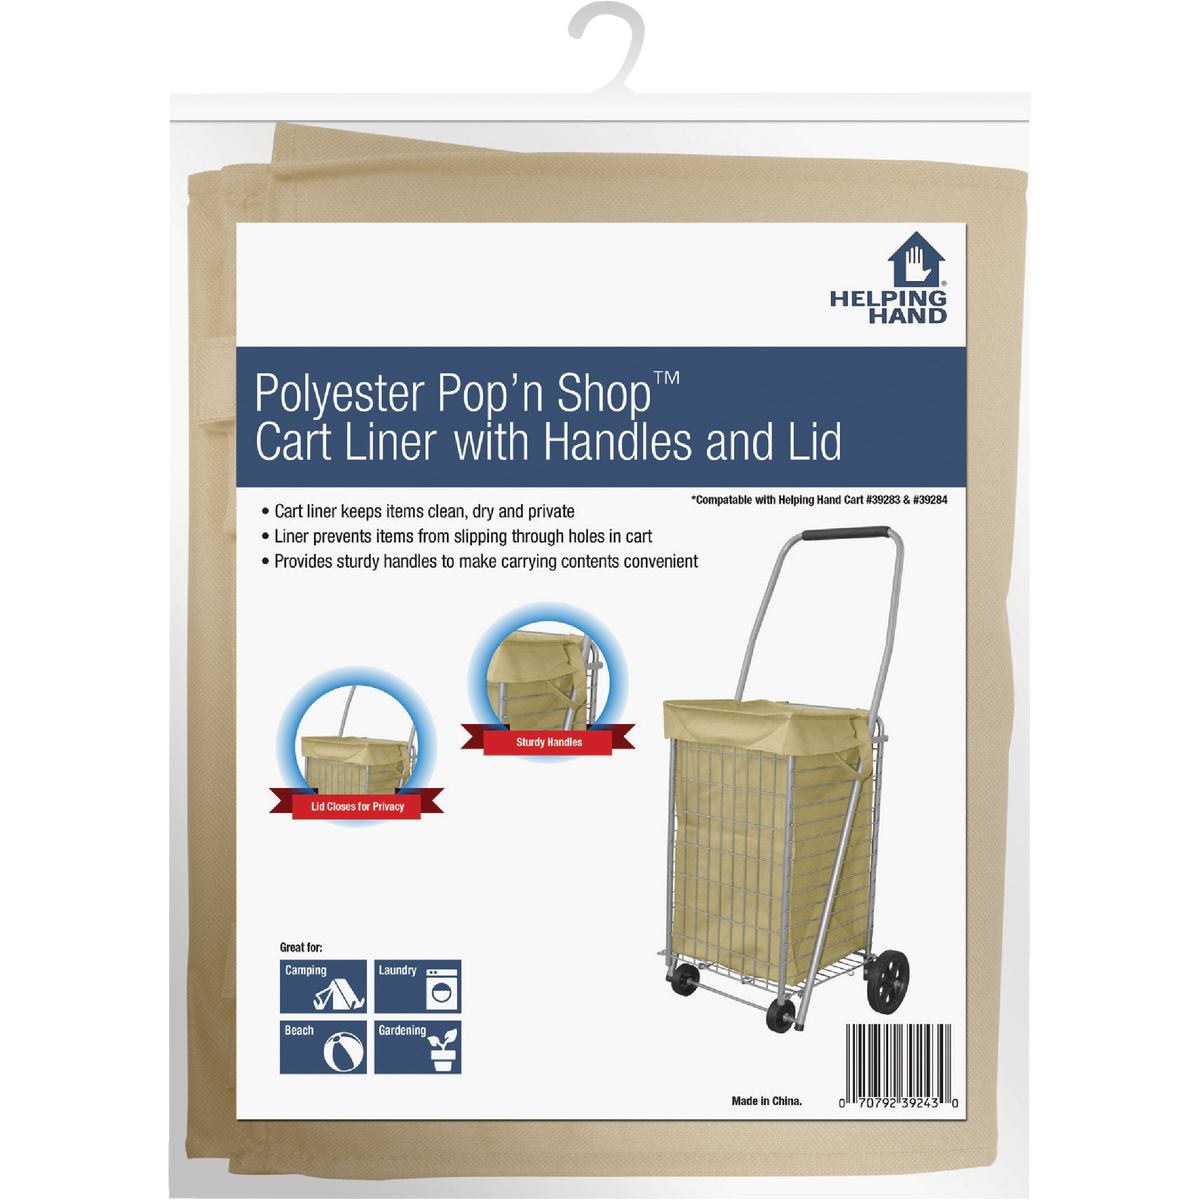 Utility/Shopping Carts & Shopping Bags